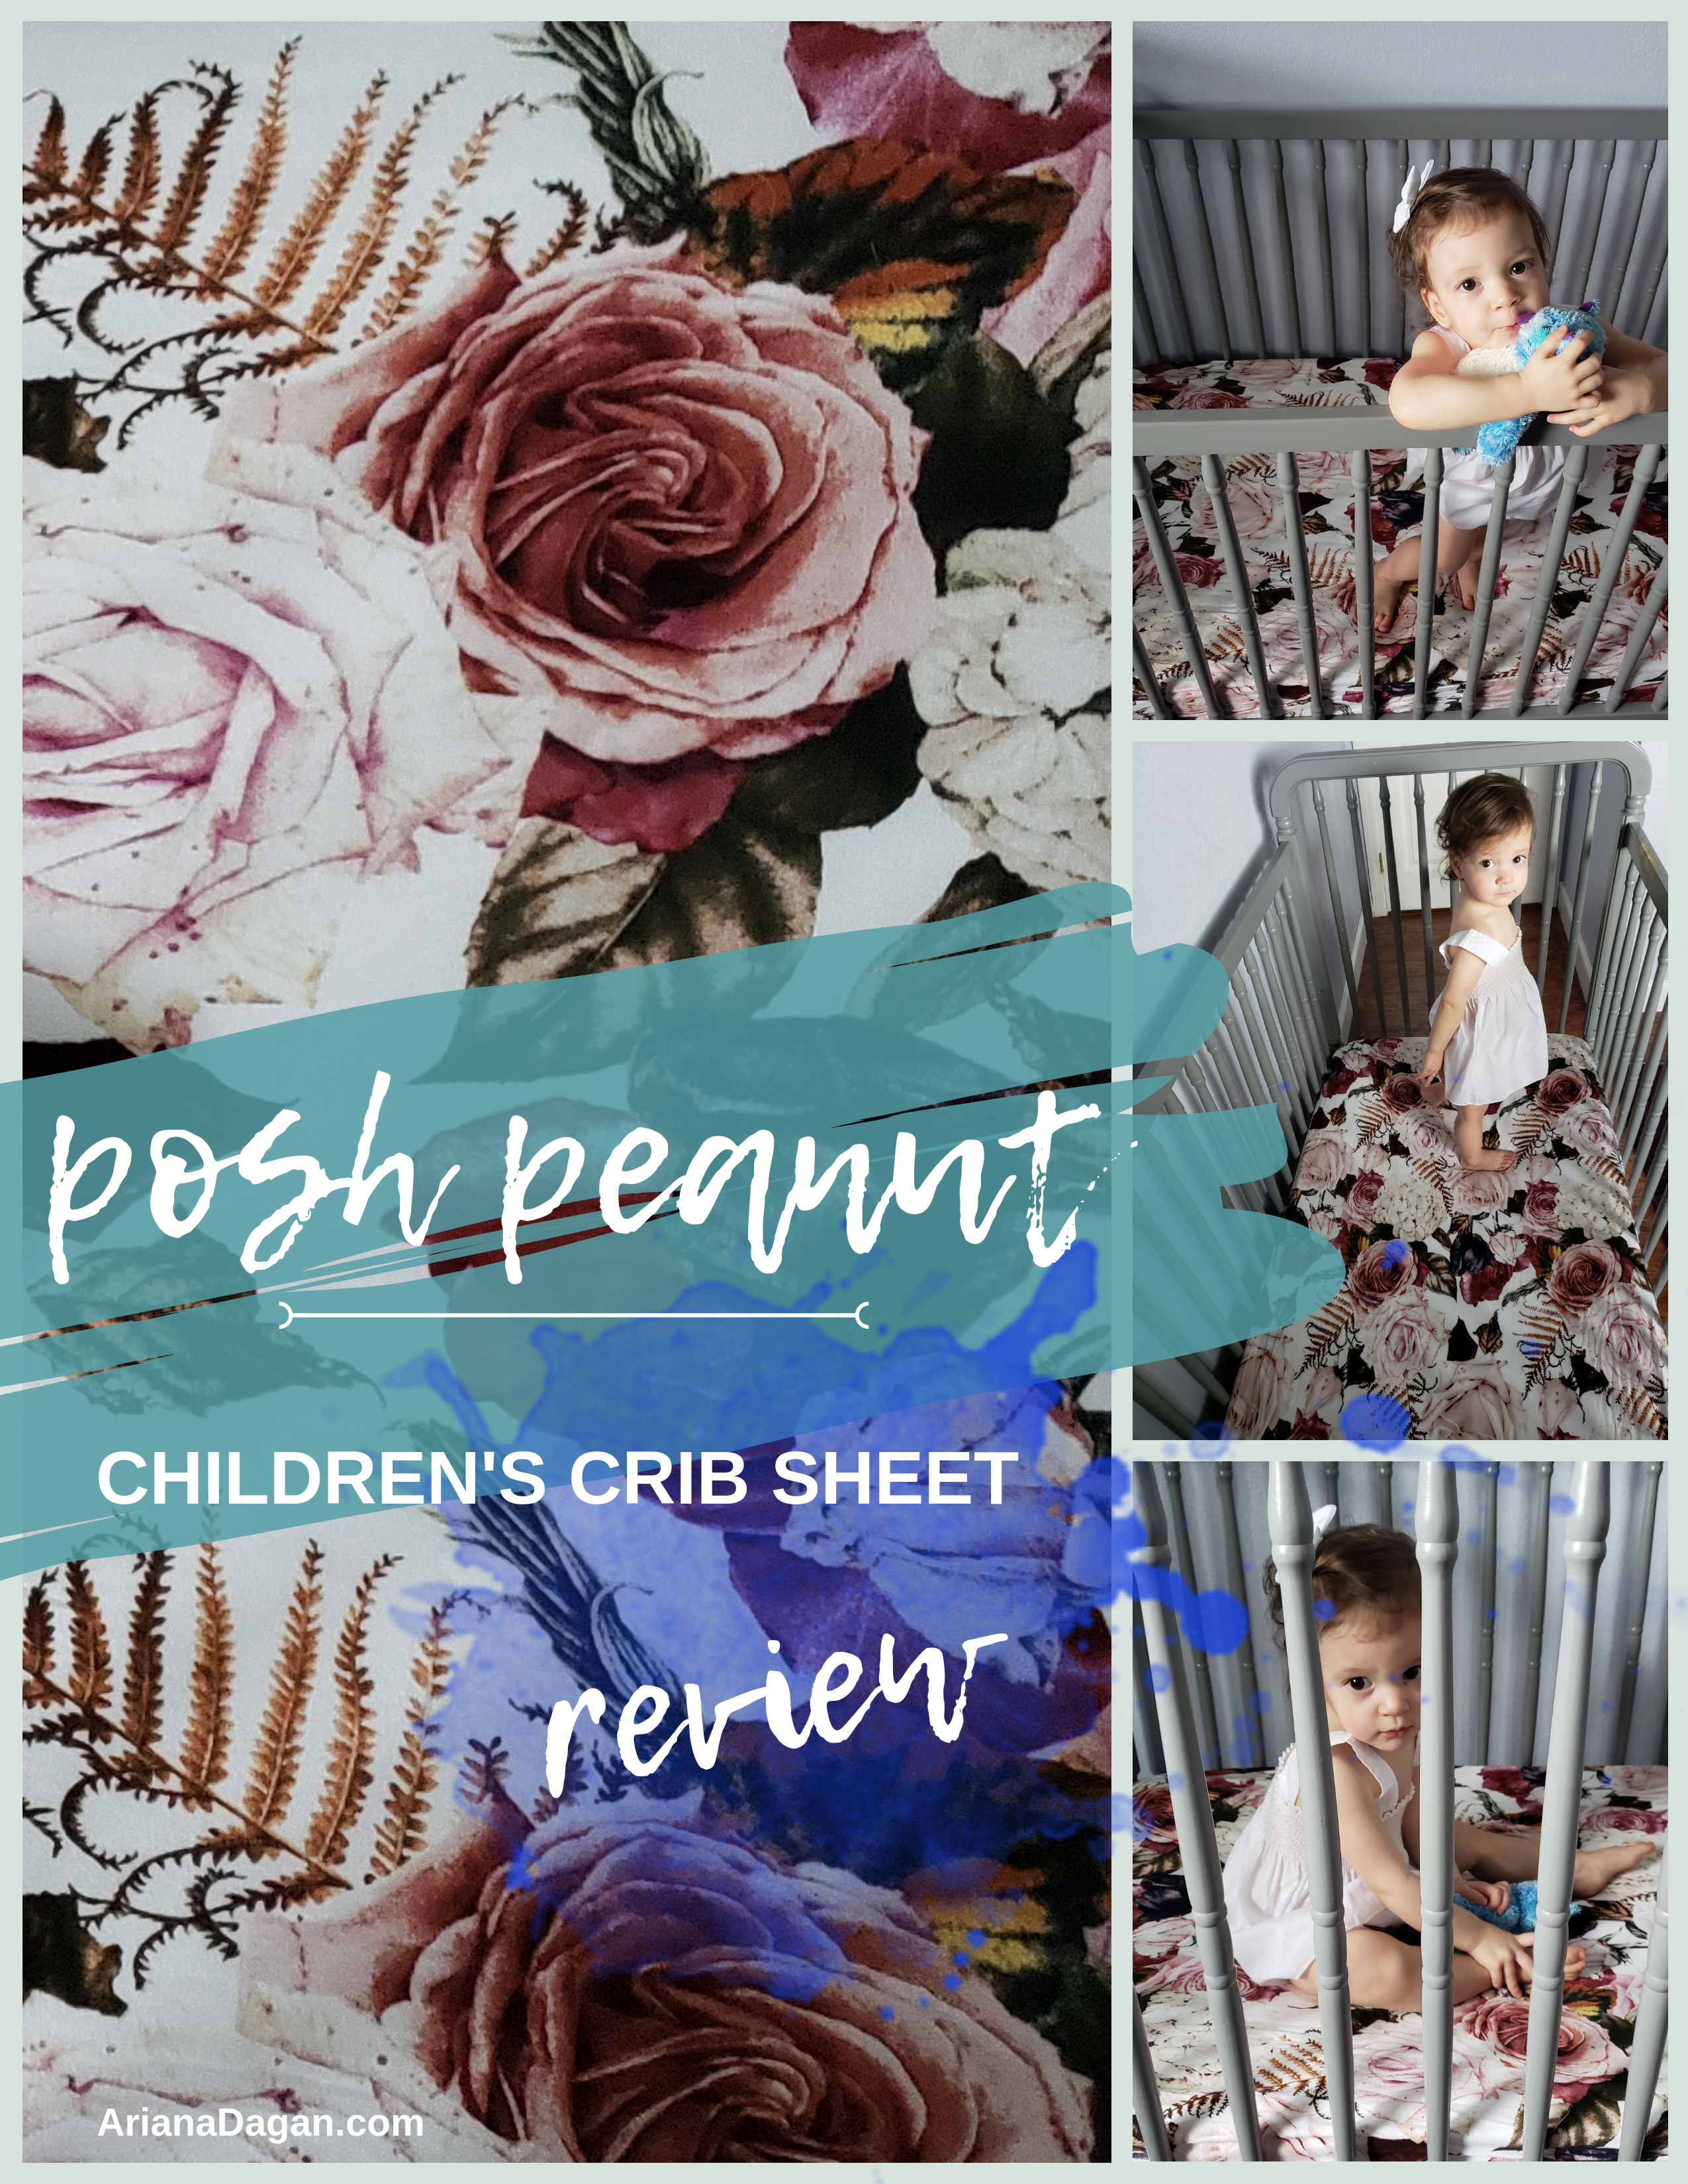 Posh peanut crib sheet review by ariana dagan